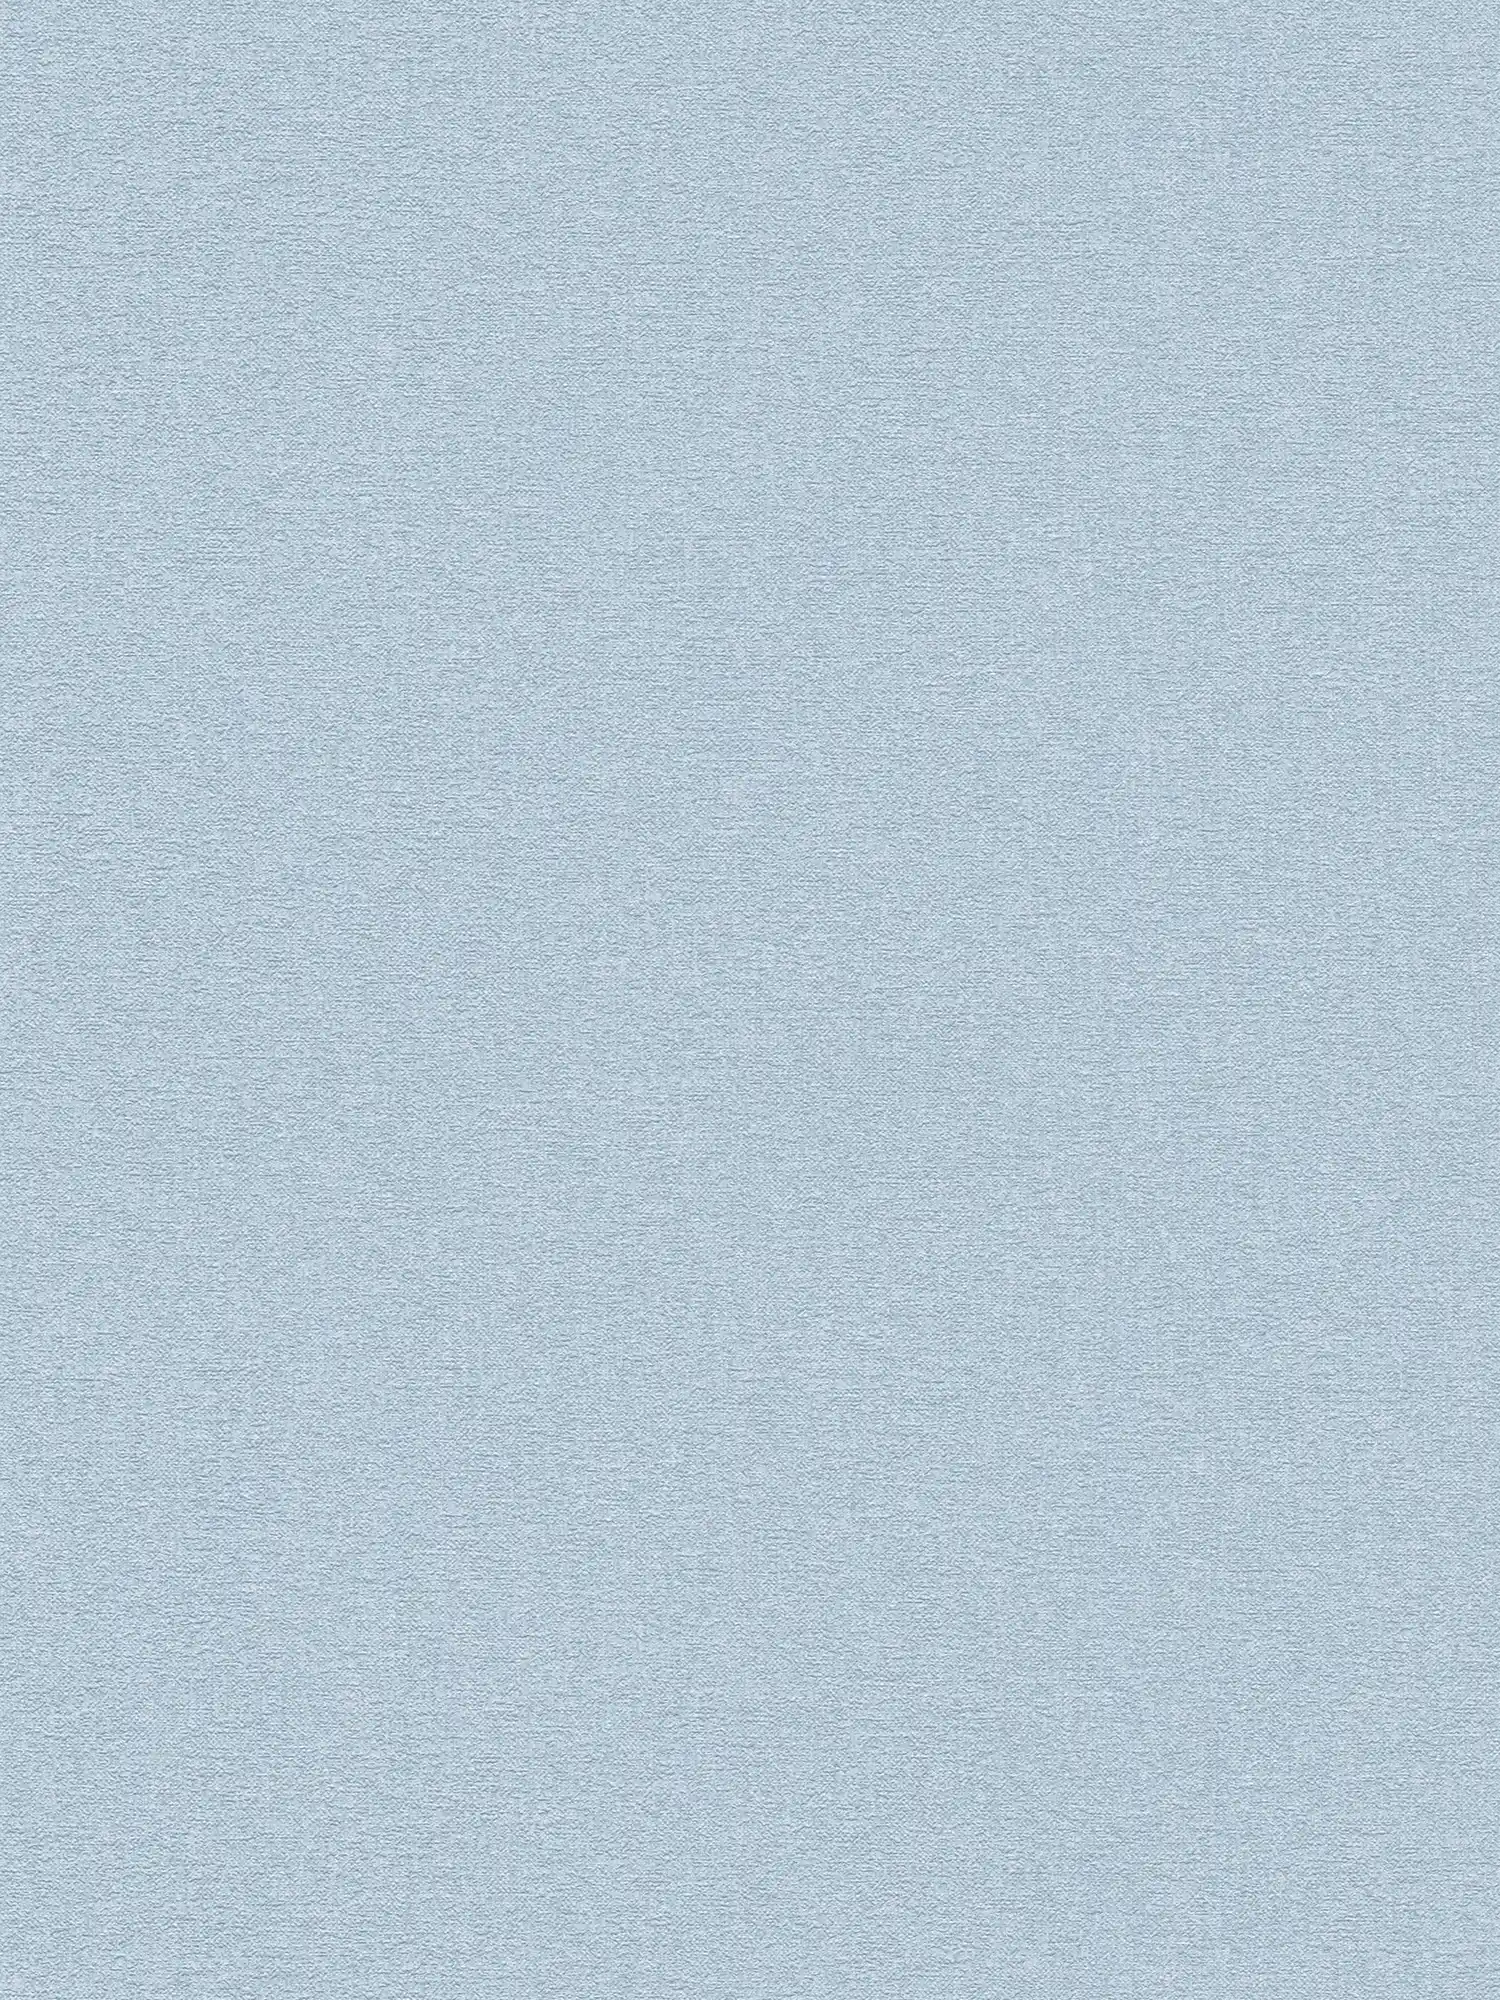 Vliestapete mit Strukturmuster einfarbig – Hellblau
